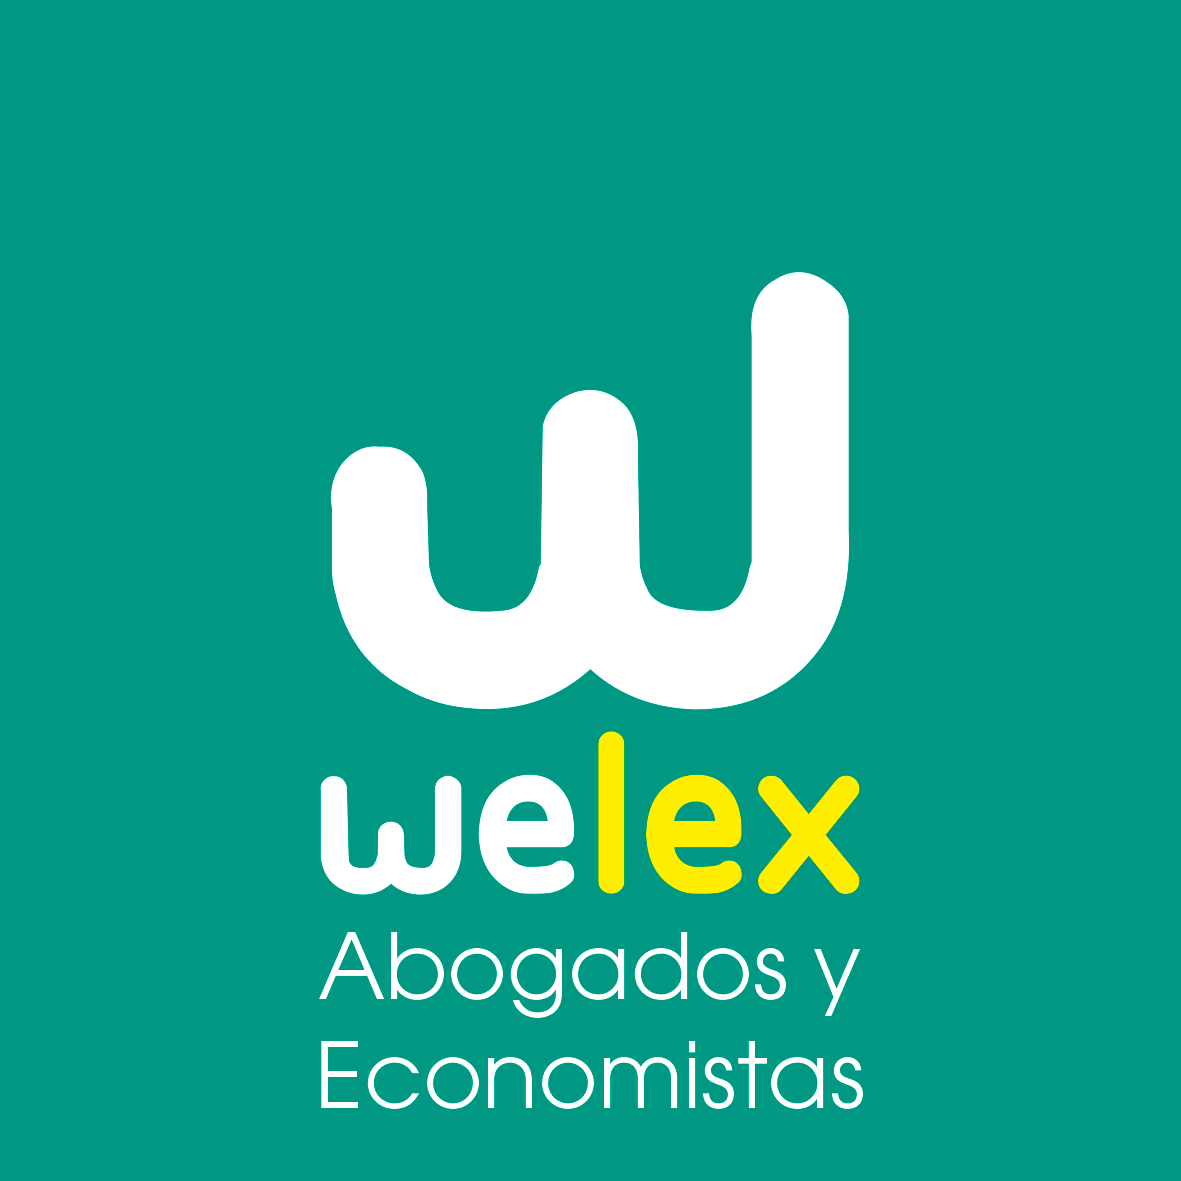 Welex, lawyers & Accountants Logo